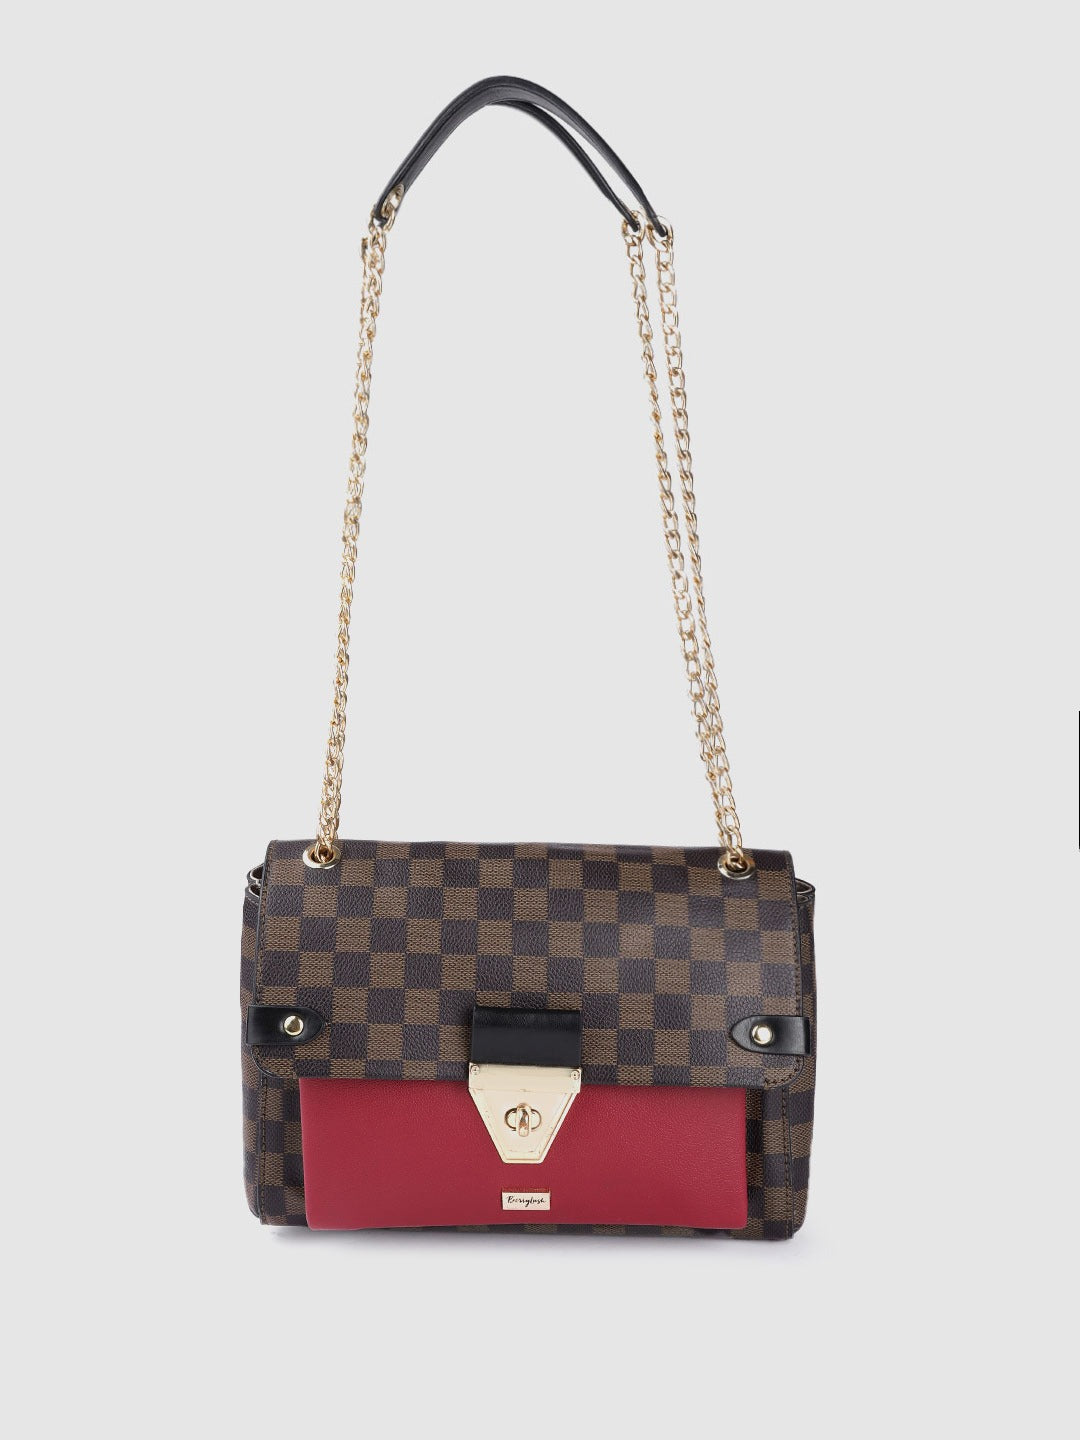 Handbags Brown Louis Vuitton Handbag, For Casual Wear